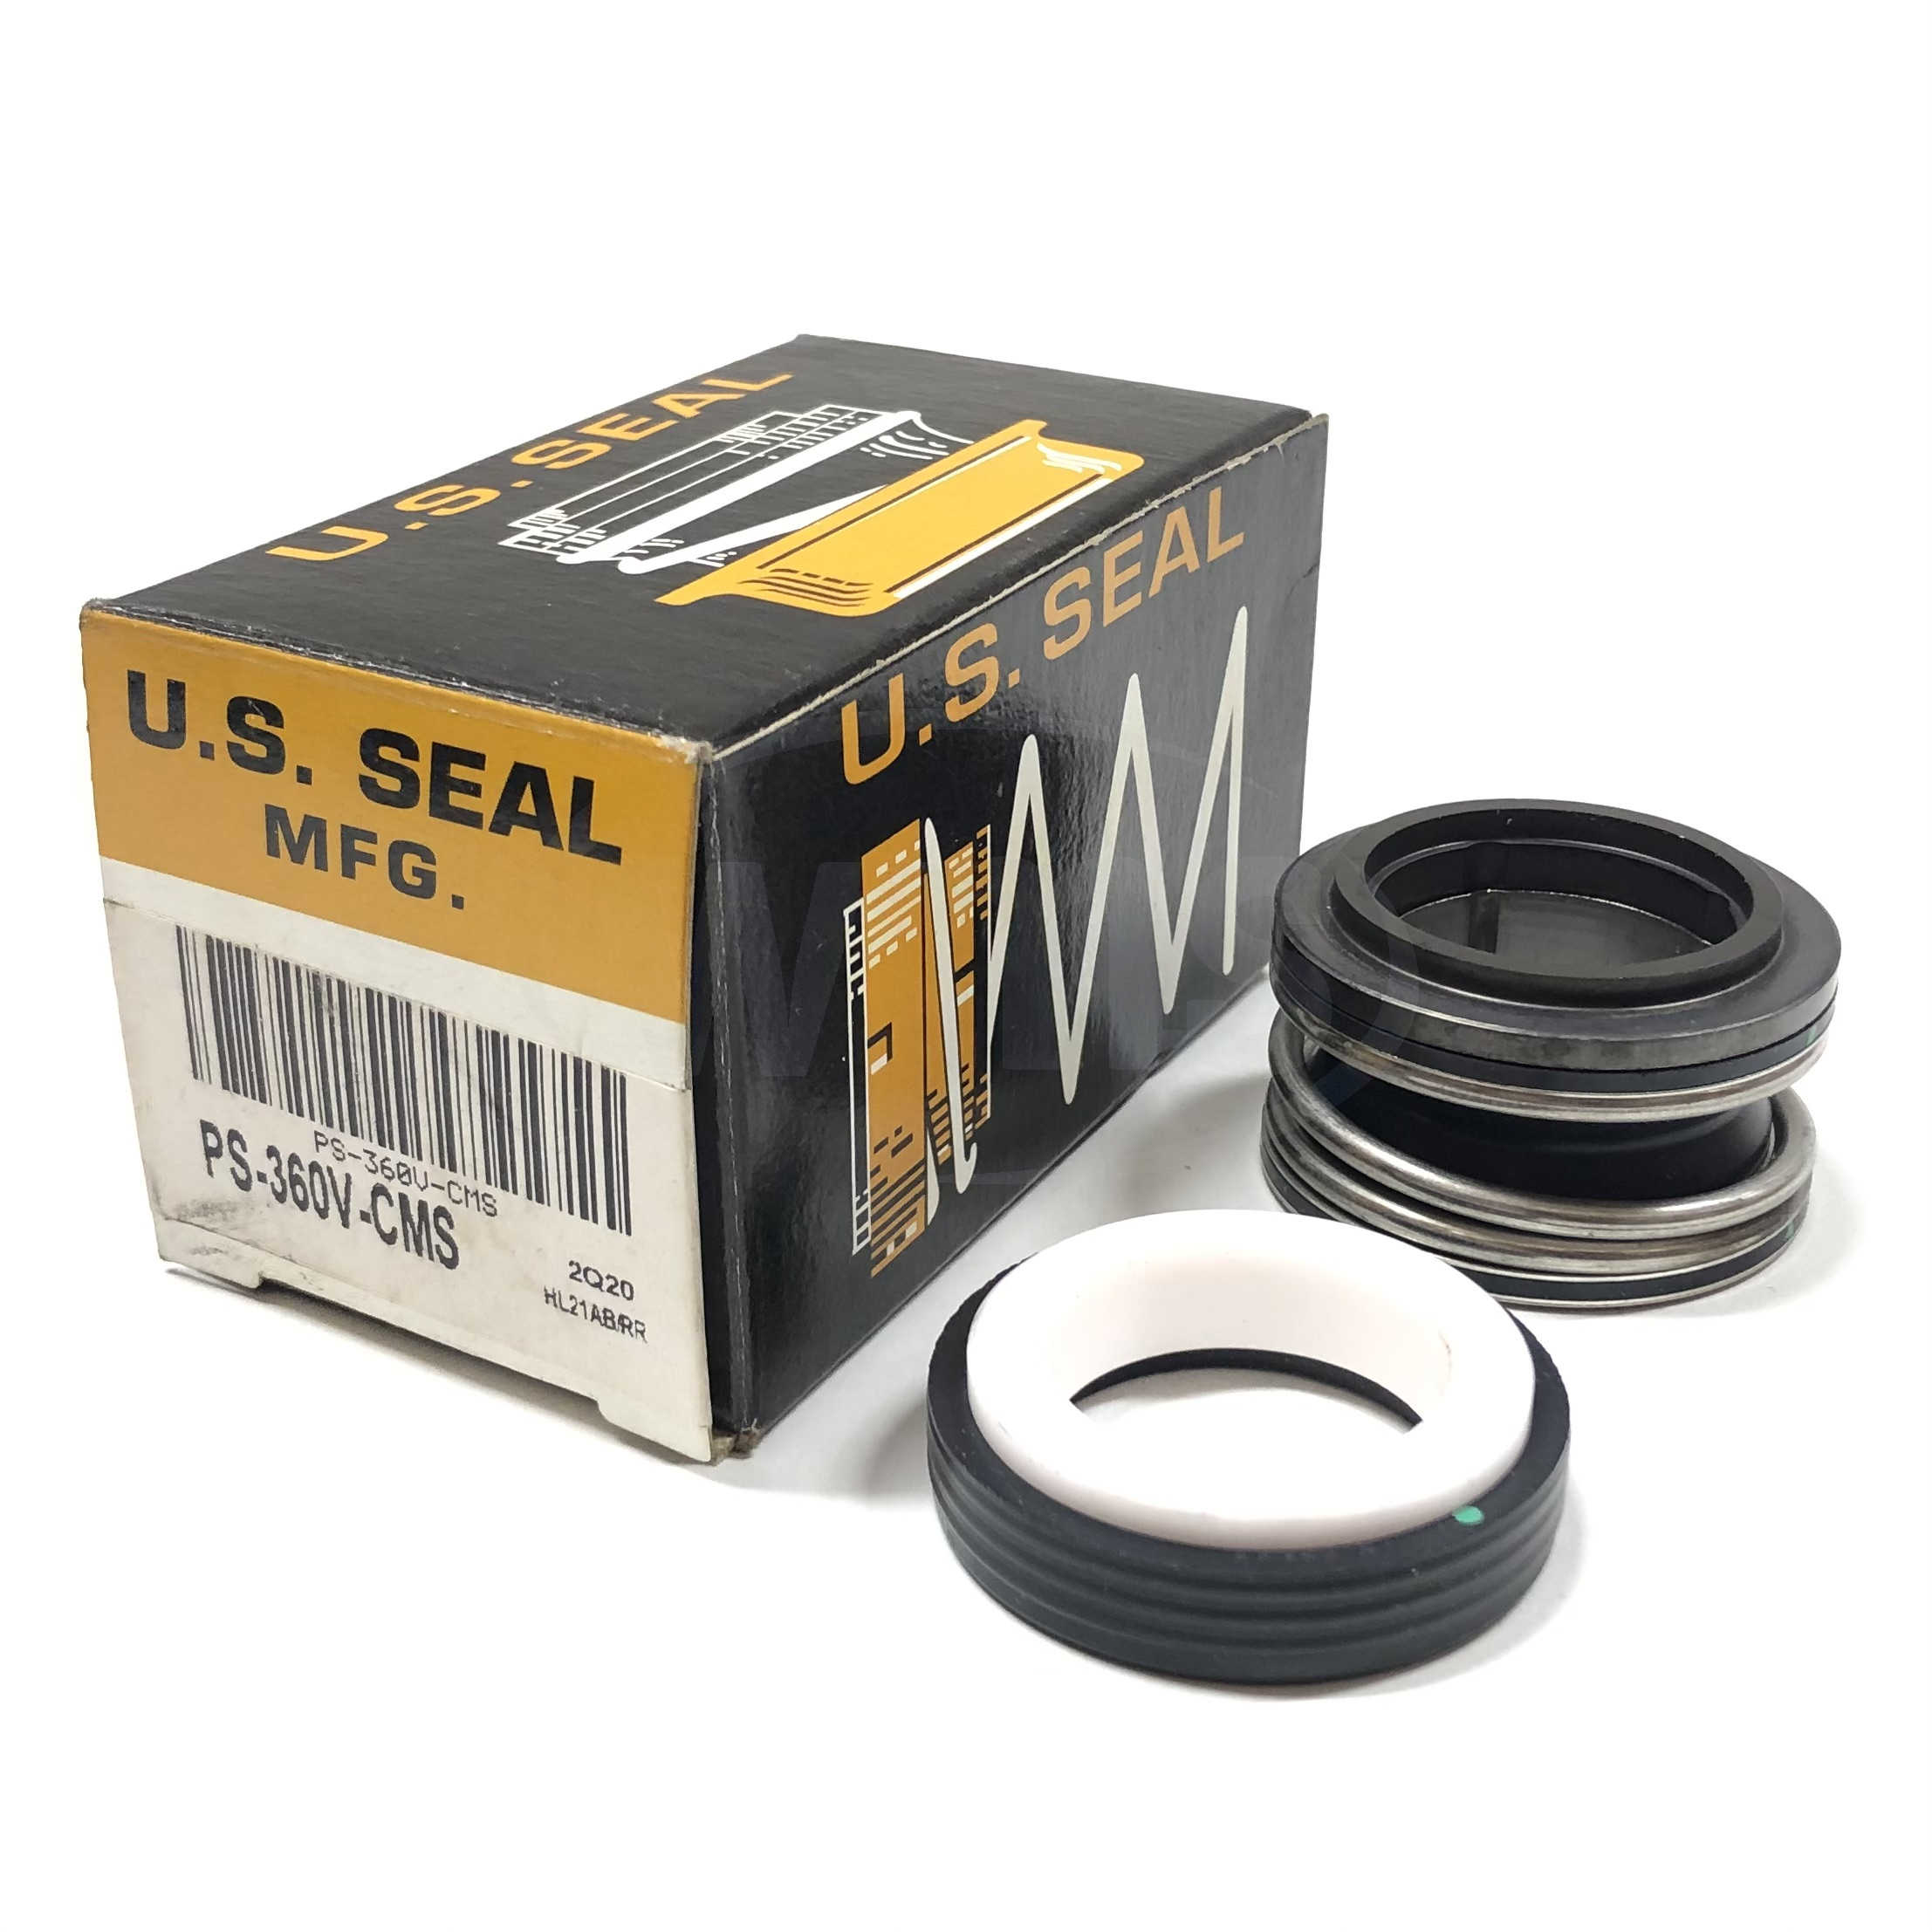 PS-360V-CMS U.S. SEAL MFG. Pump Seal 1